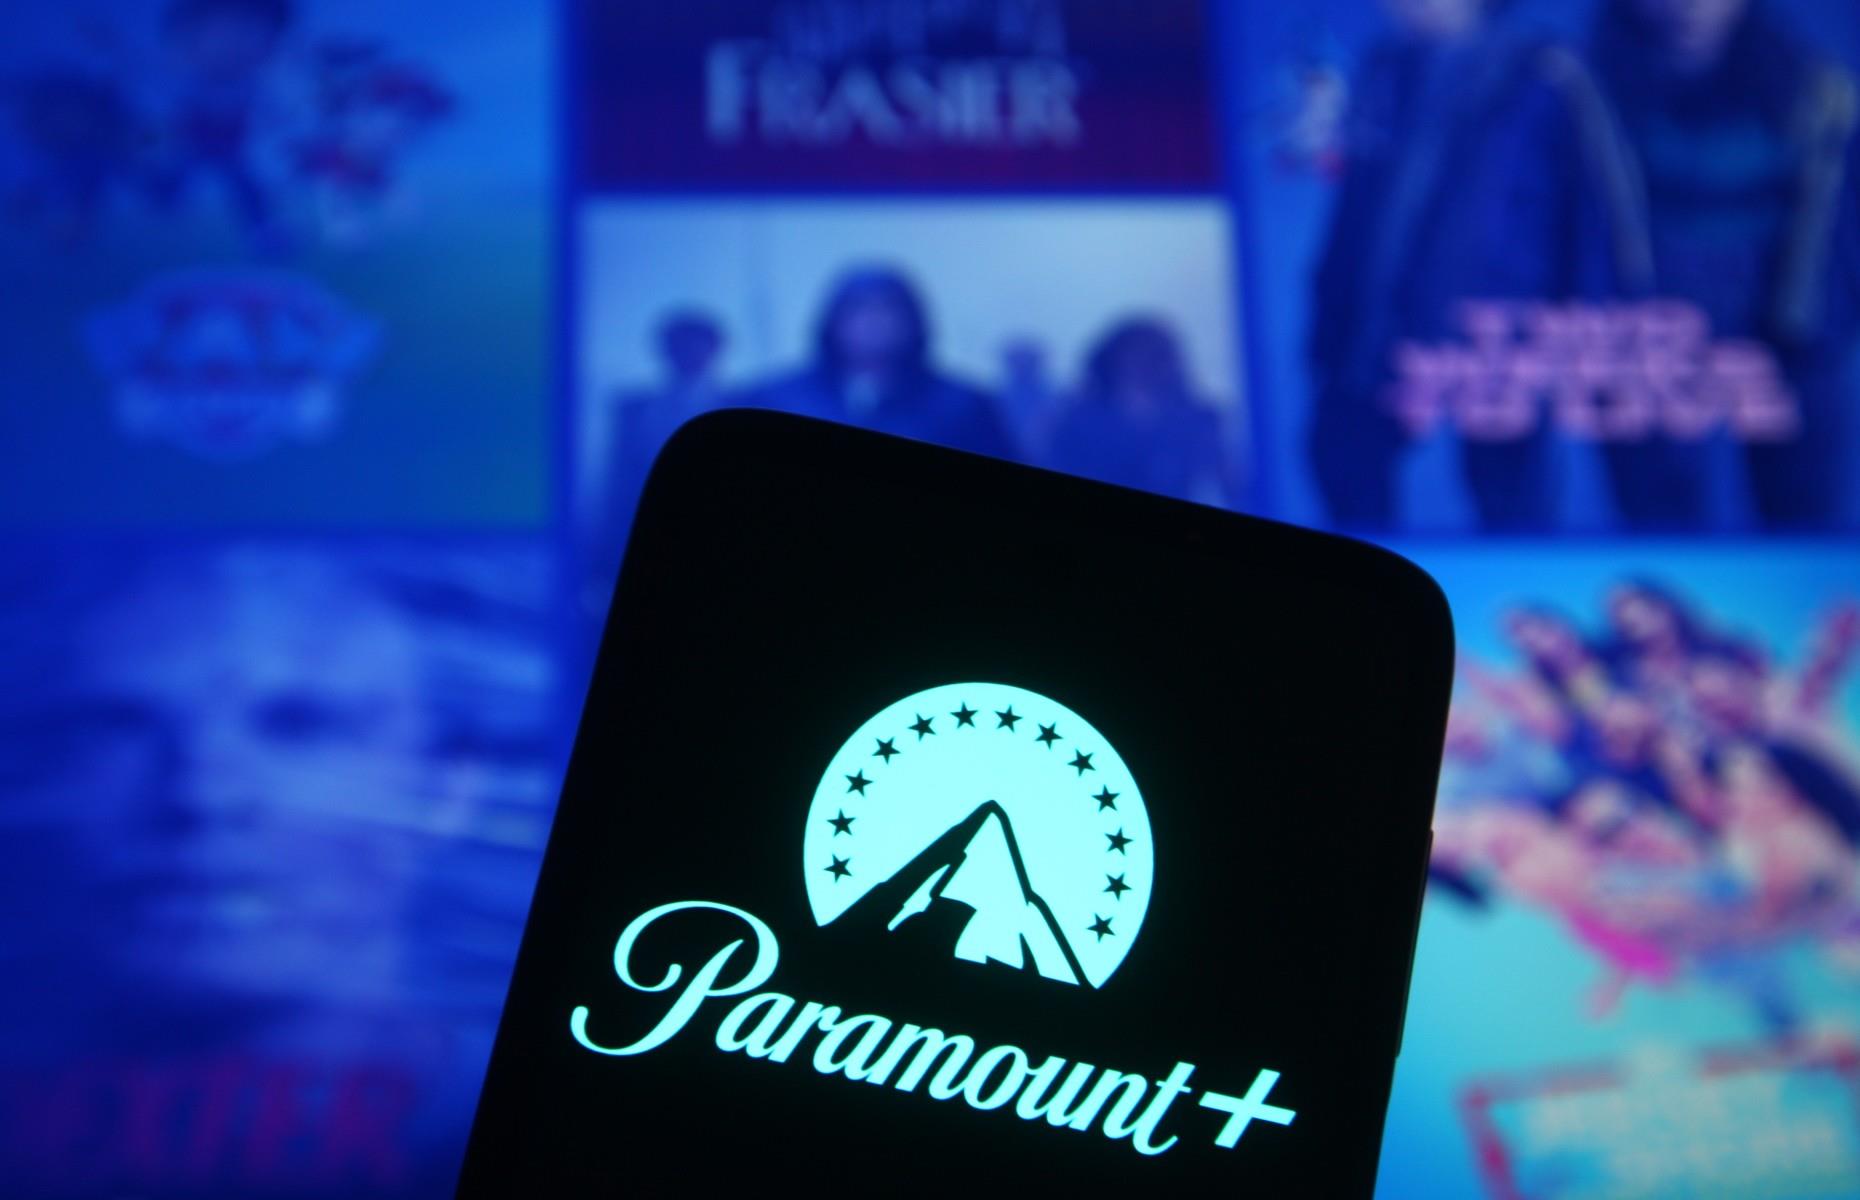 Paramount+ – 56 million subscribers